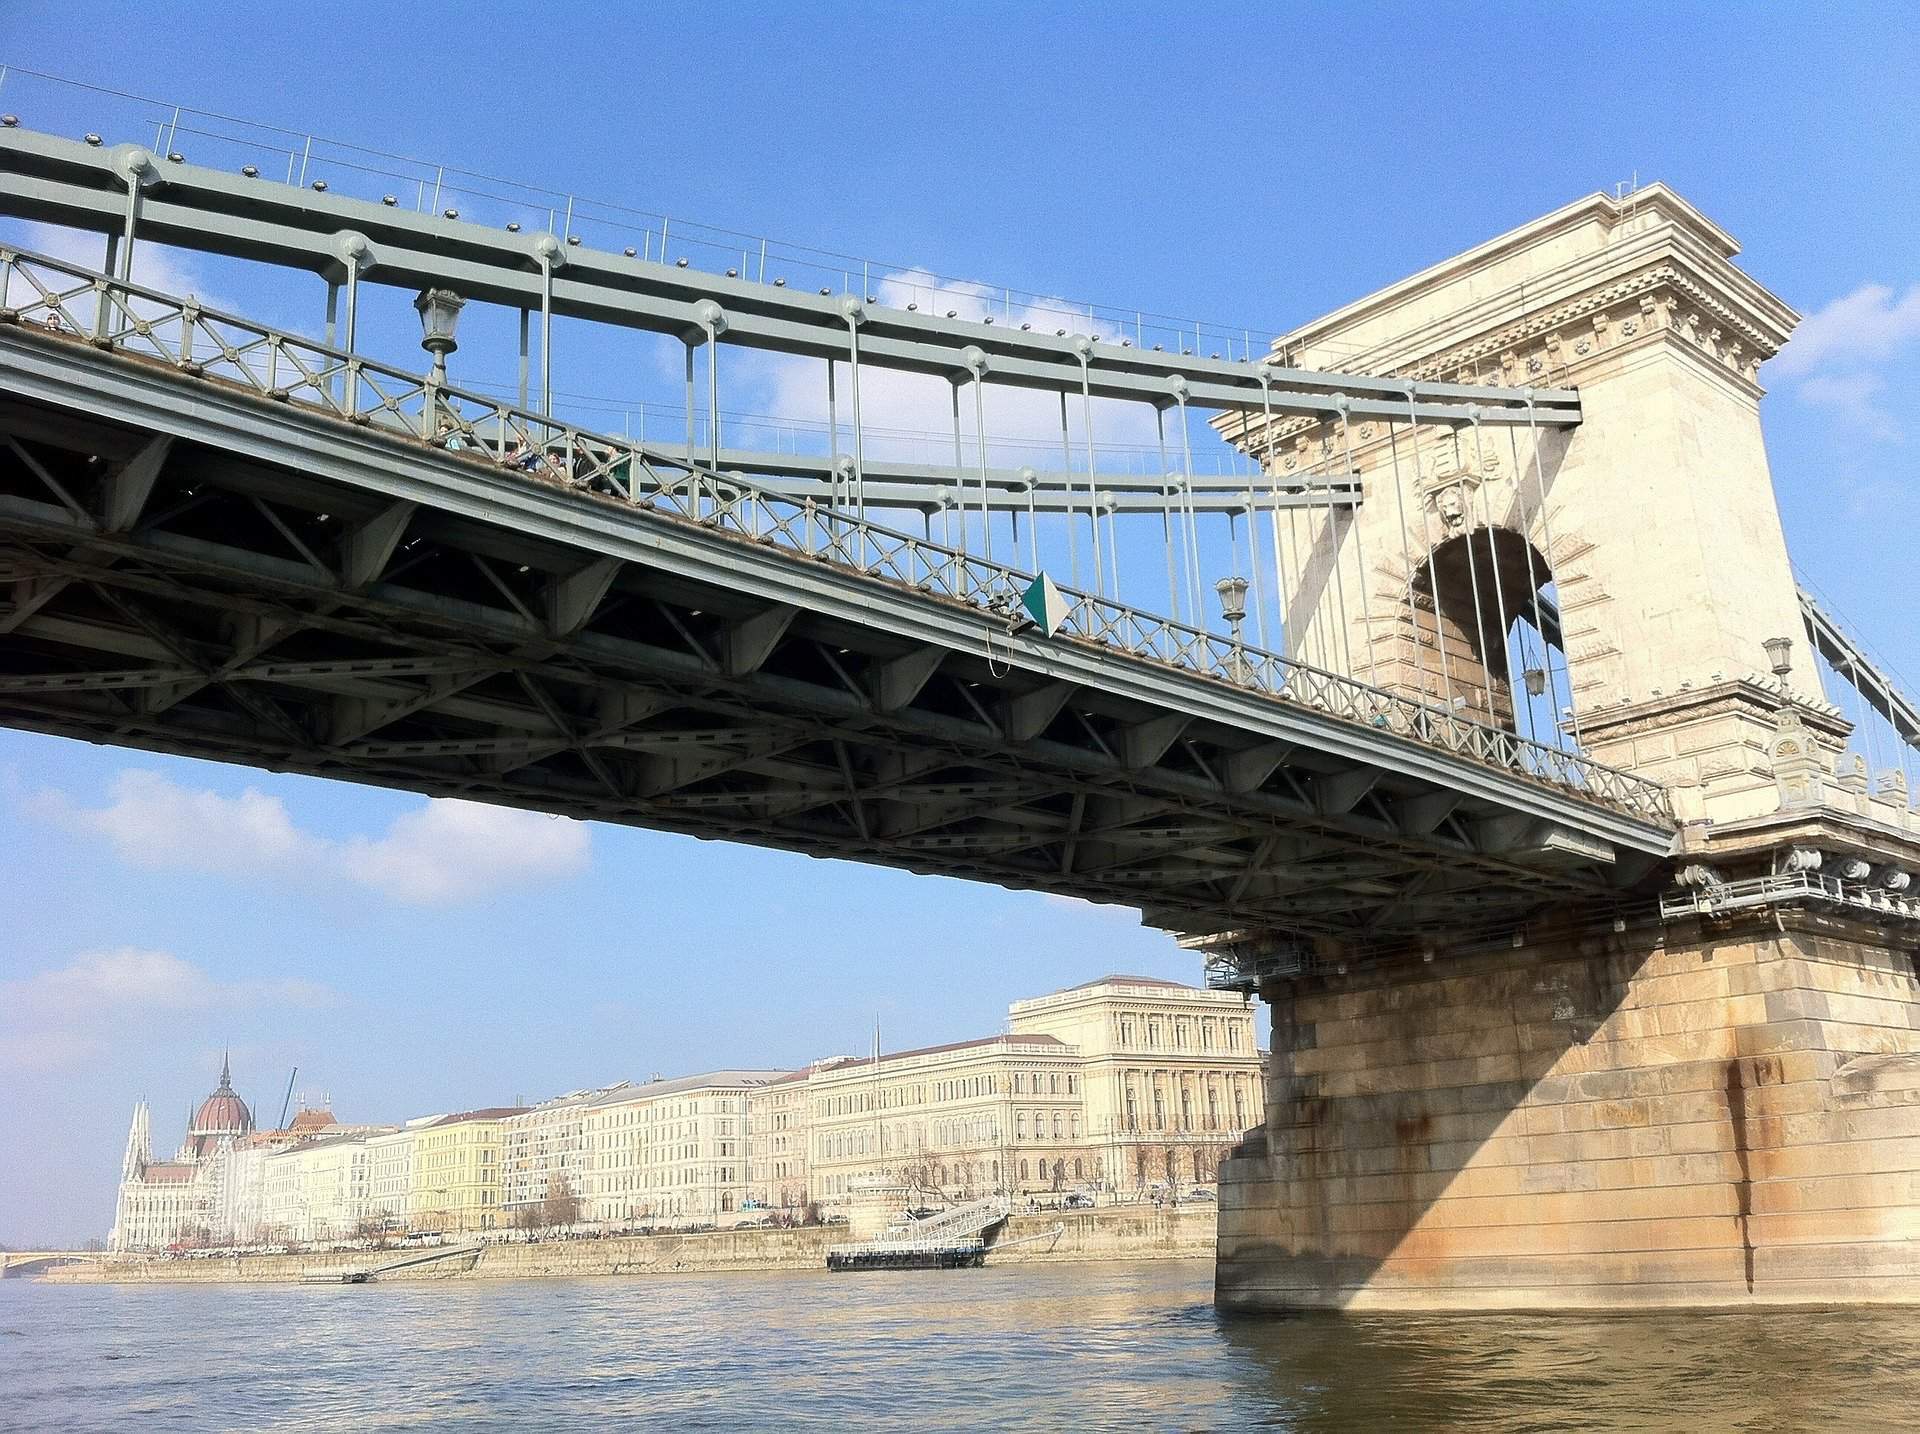 будапештский цепной мост